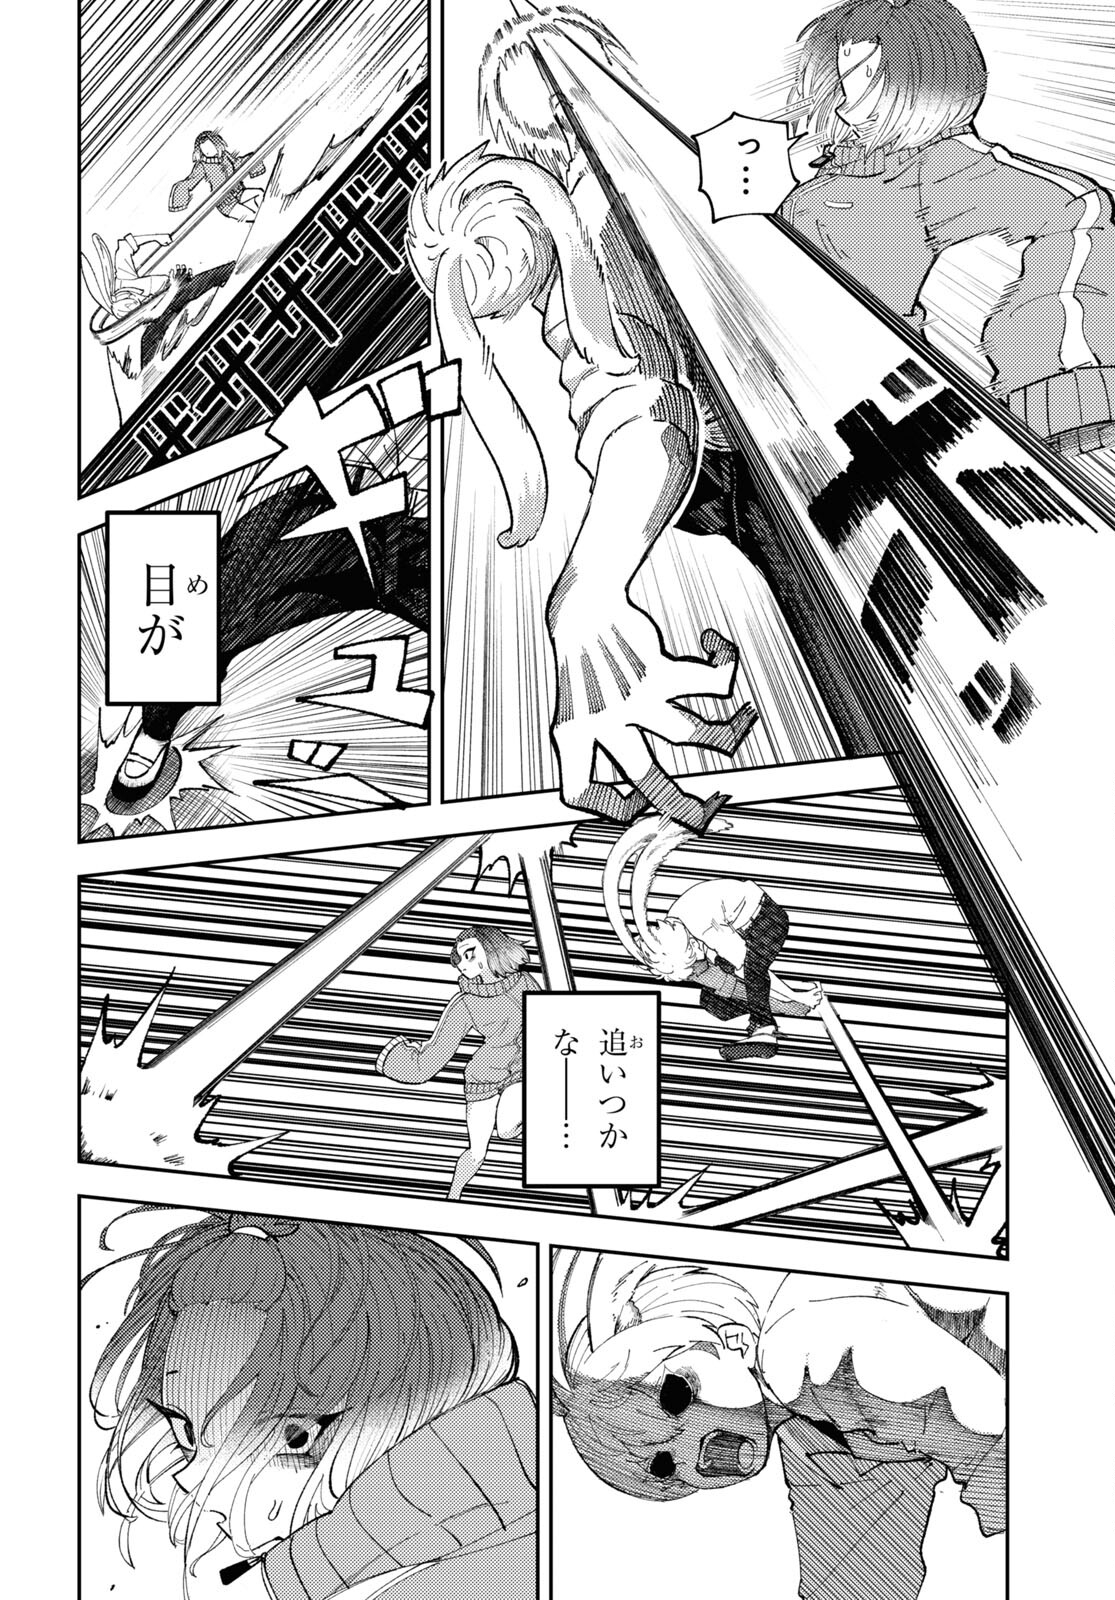 Garuru Girl - Chapter 3 - Page 30